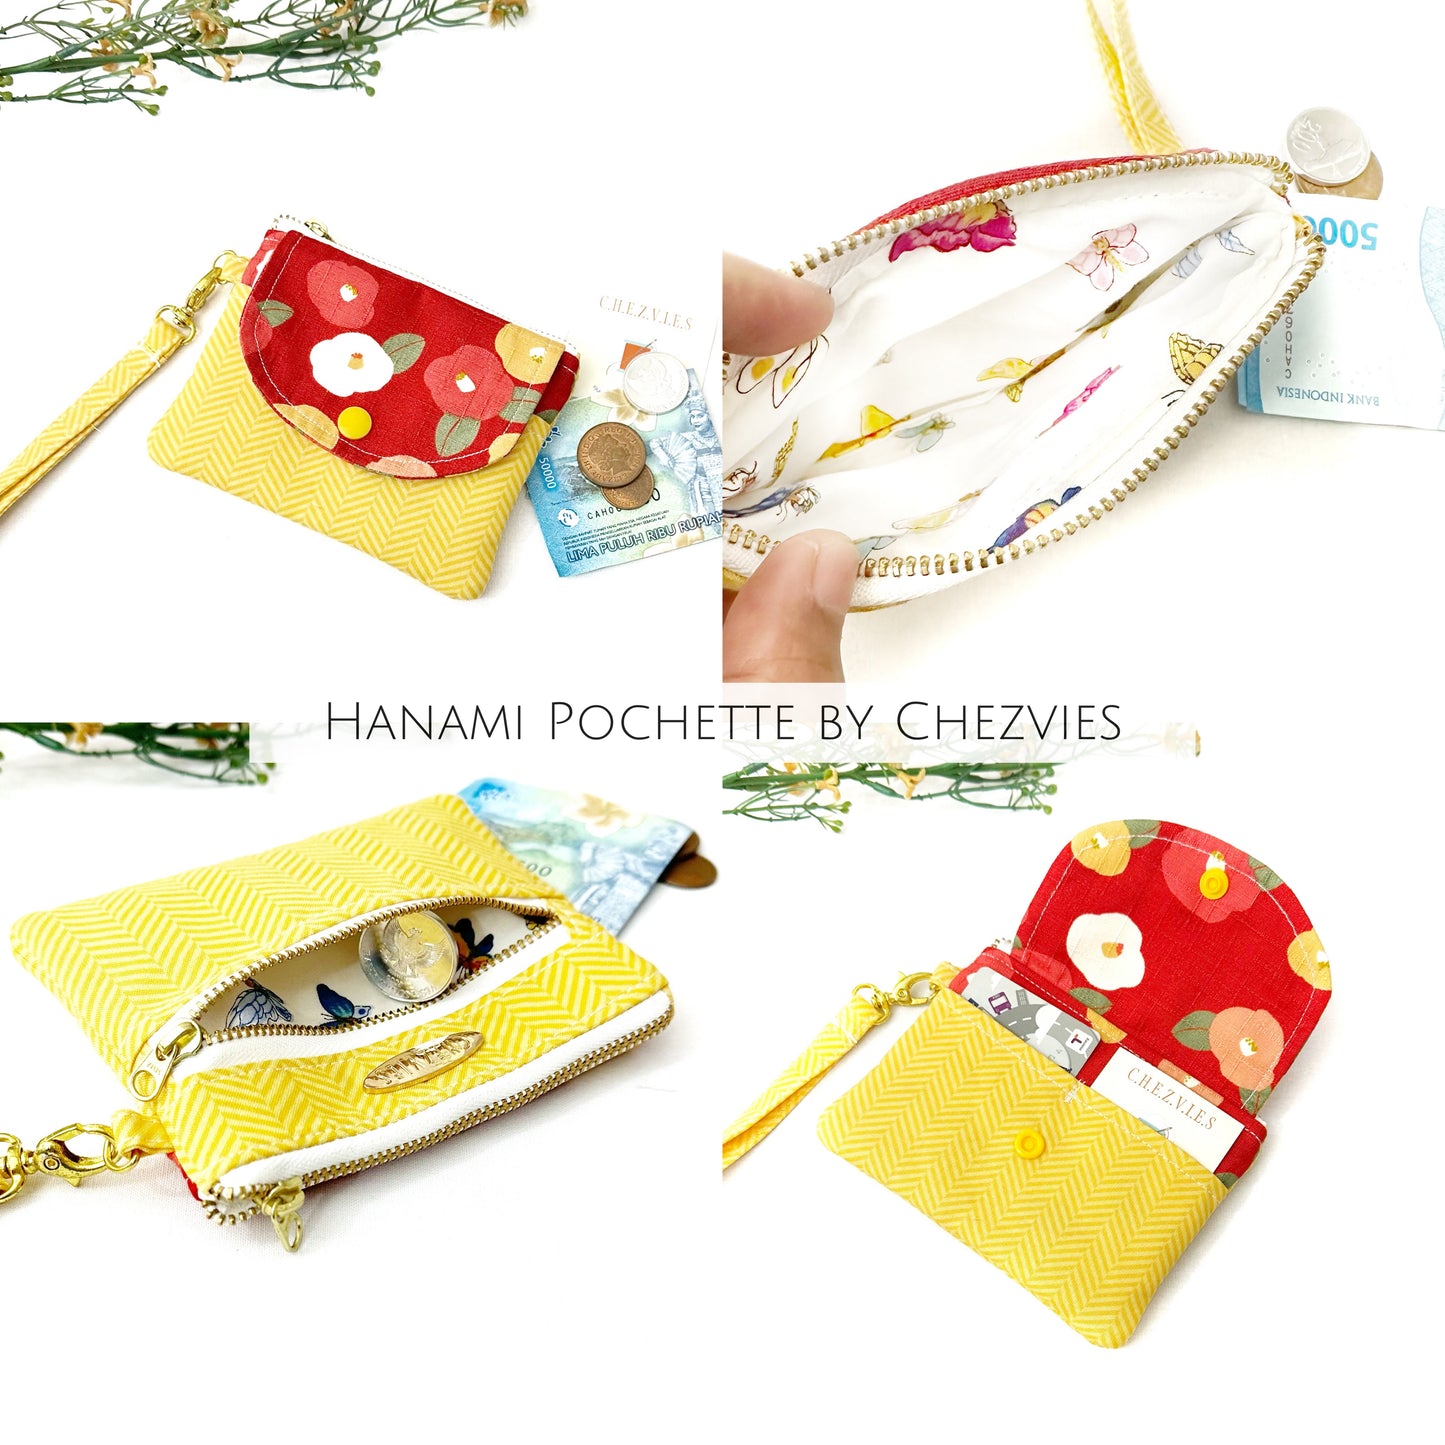 Hanami Pochette Pdf Sewing Pattern - 3 Sizes with Video